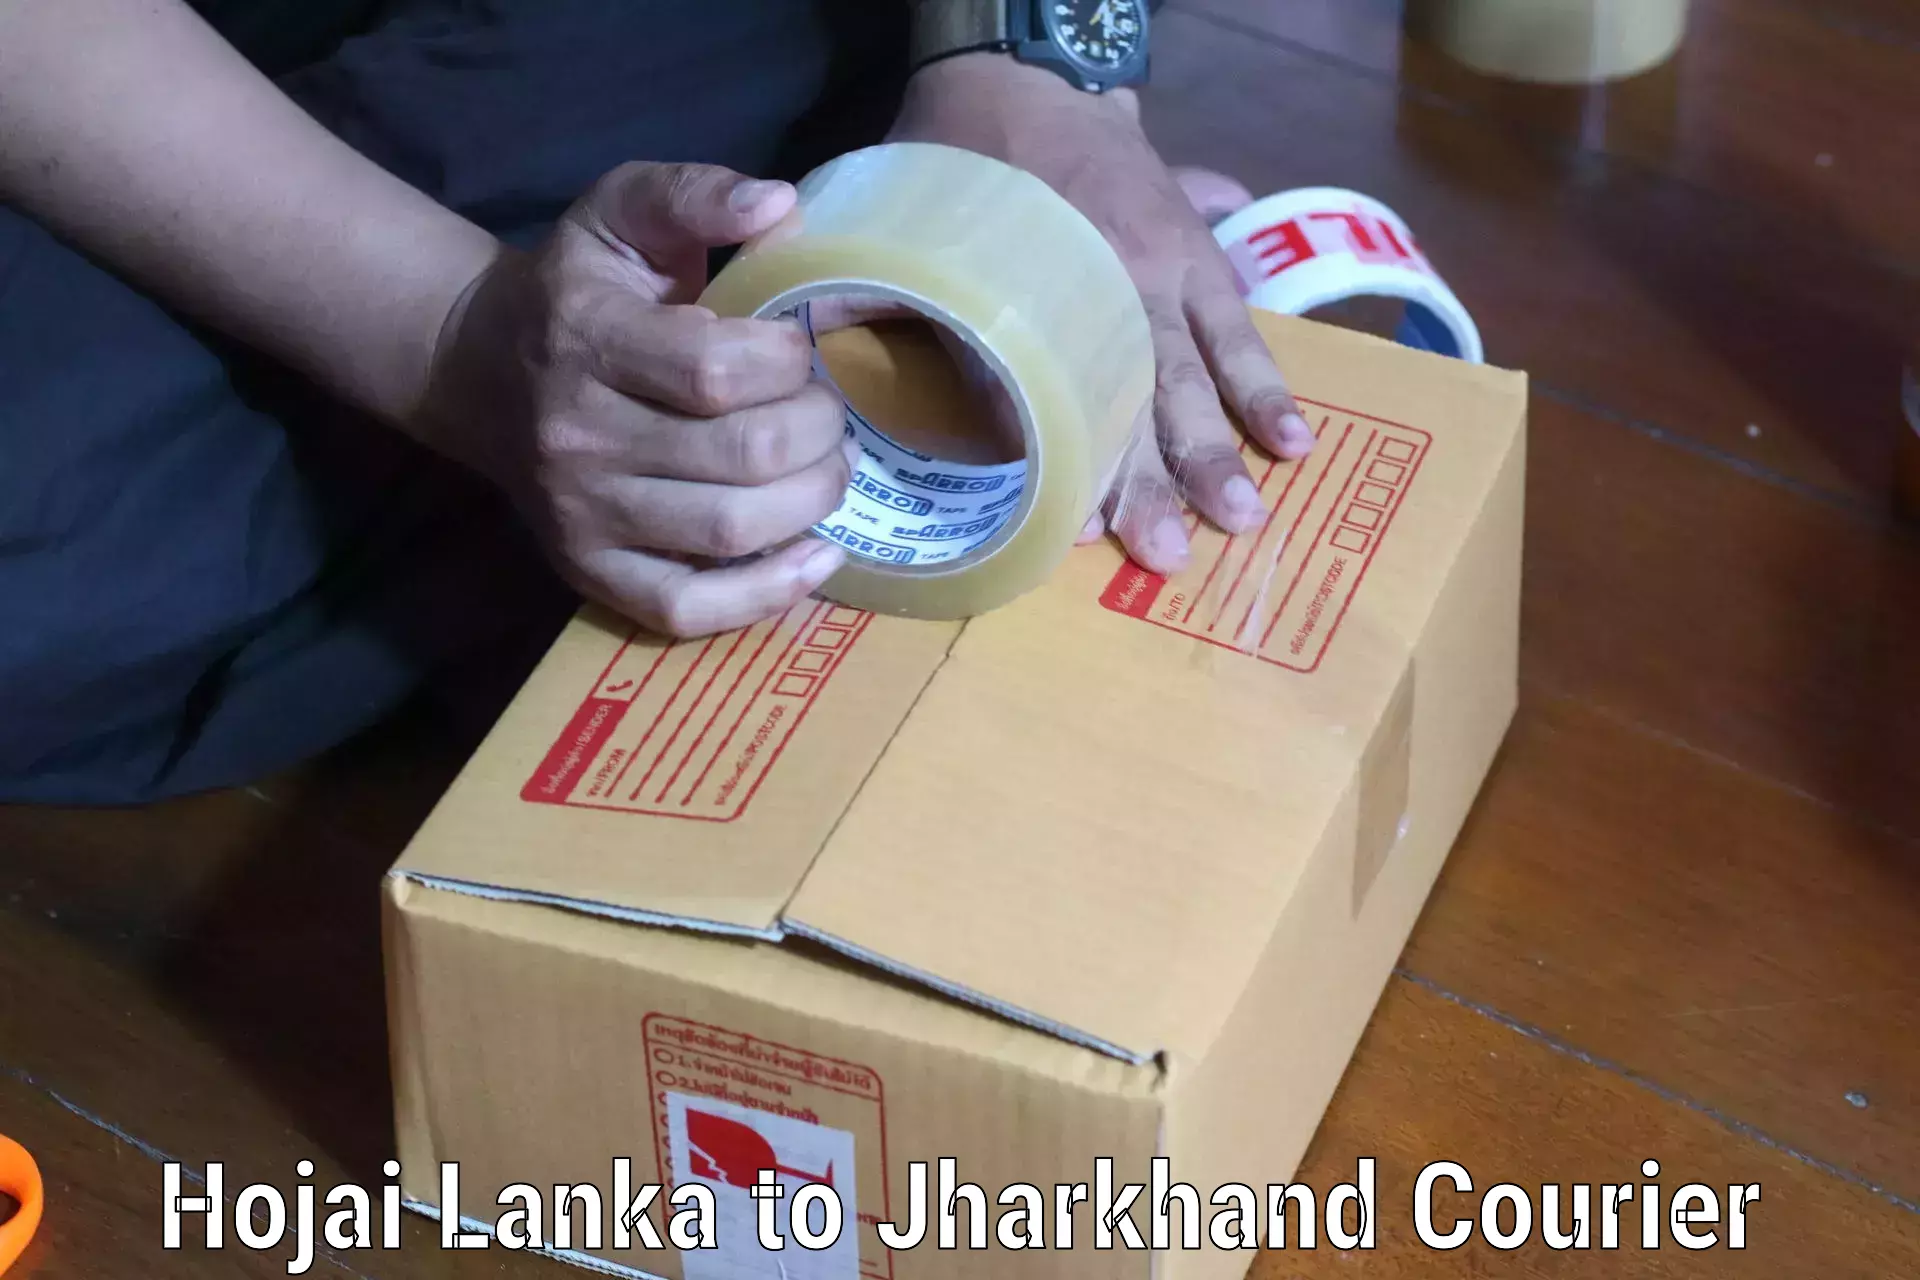 Courier tracking online Hojai Lanka to Godabar Chatra